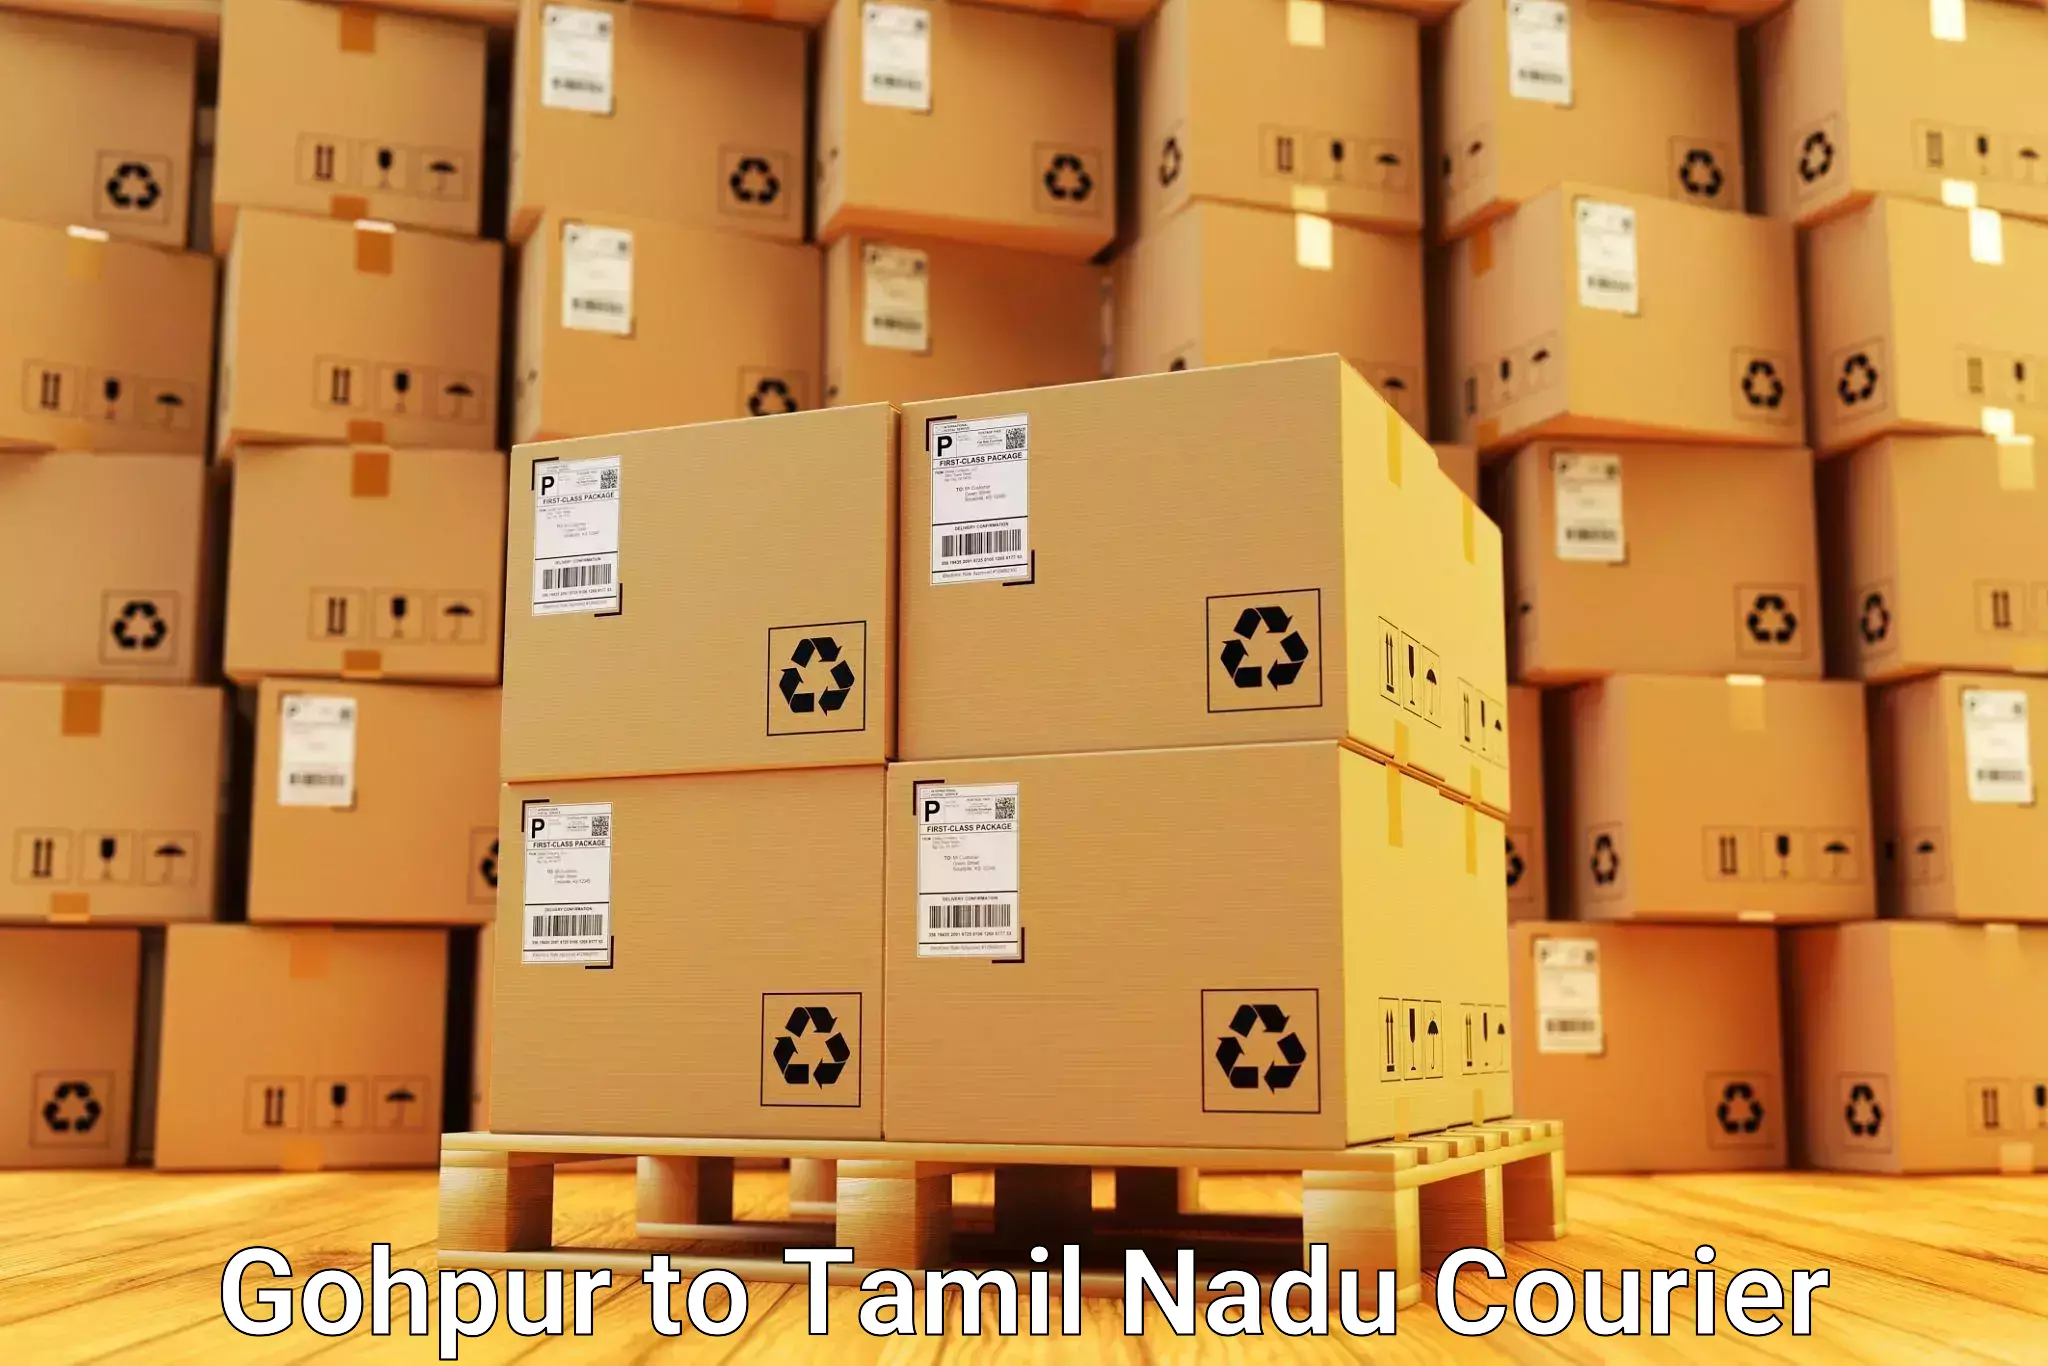 Cost-effective moving options Gohpur to Thiruvadanai